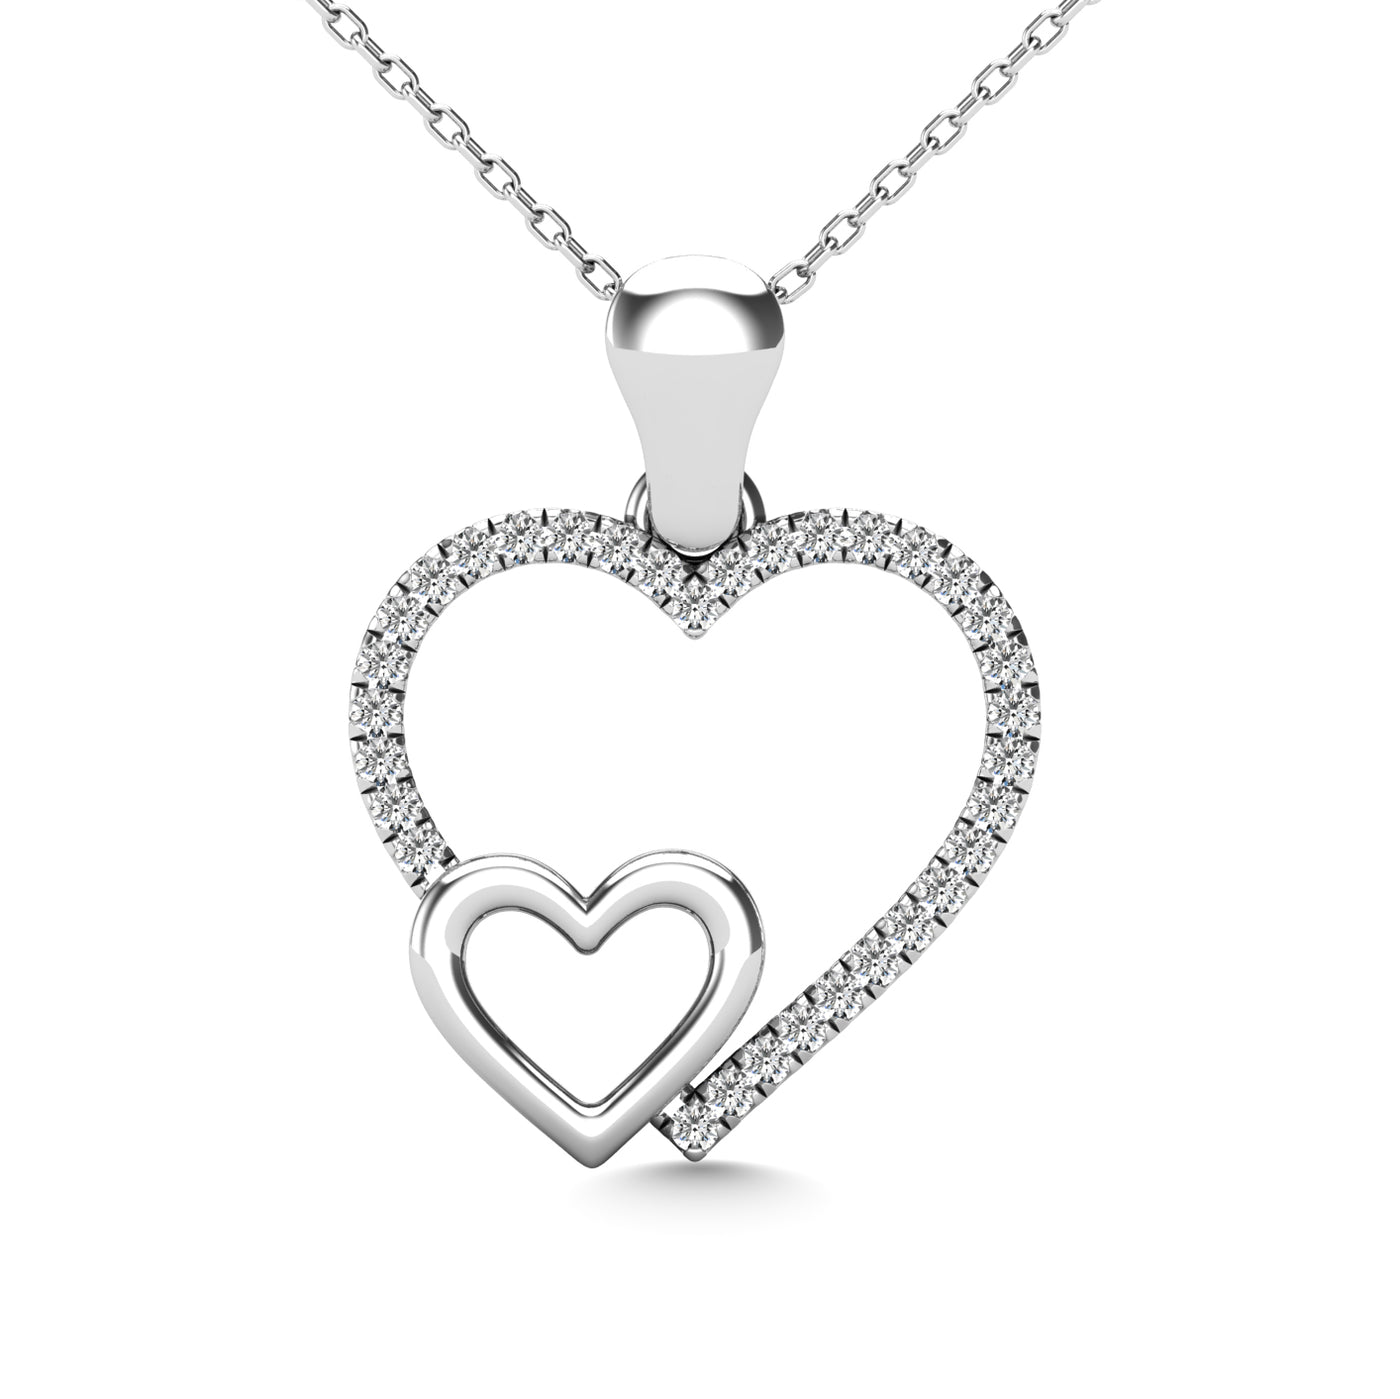 10K White Gold 1/20 Ctw Diamond Double Heart Pendant